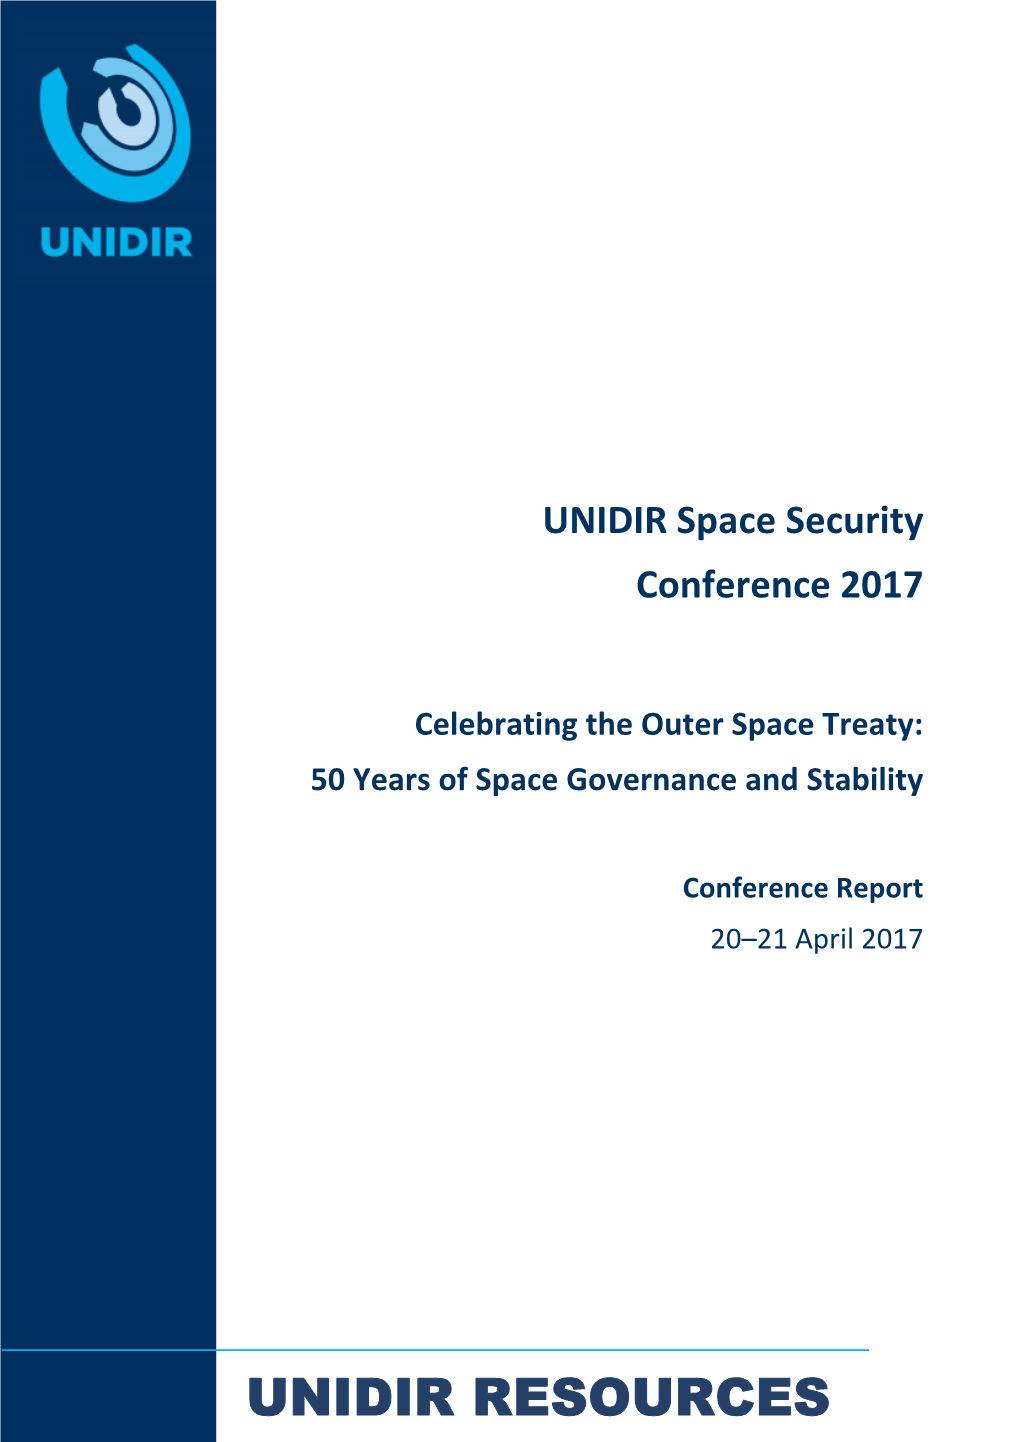 UNIDIR Space Security Conference 2017